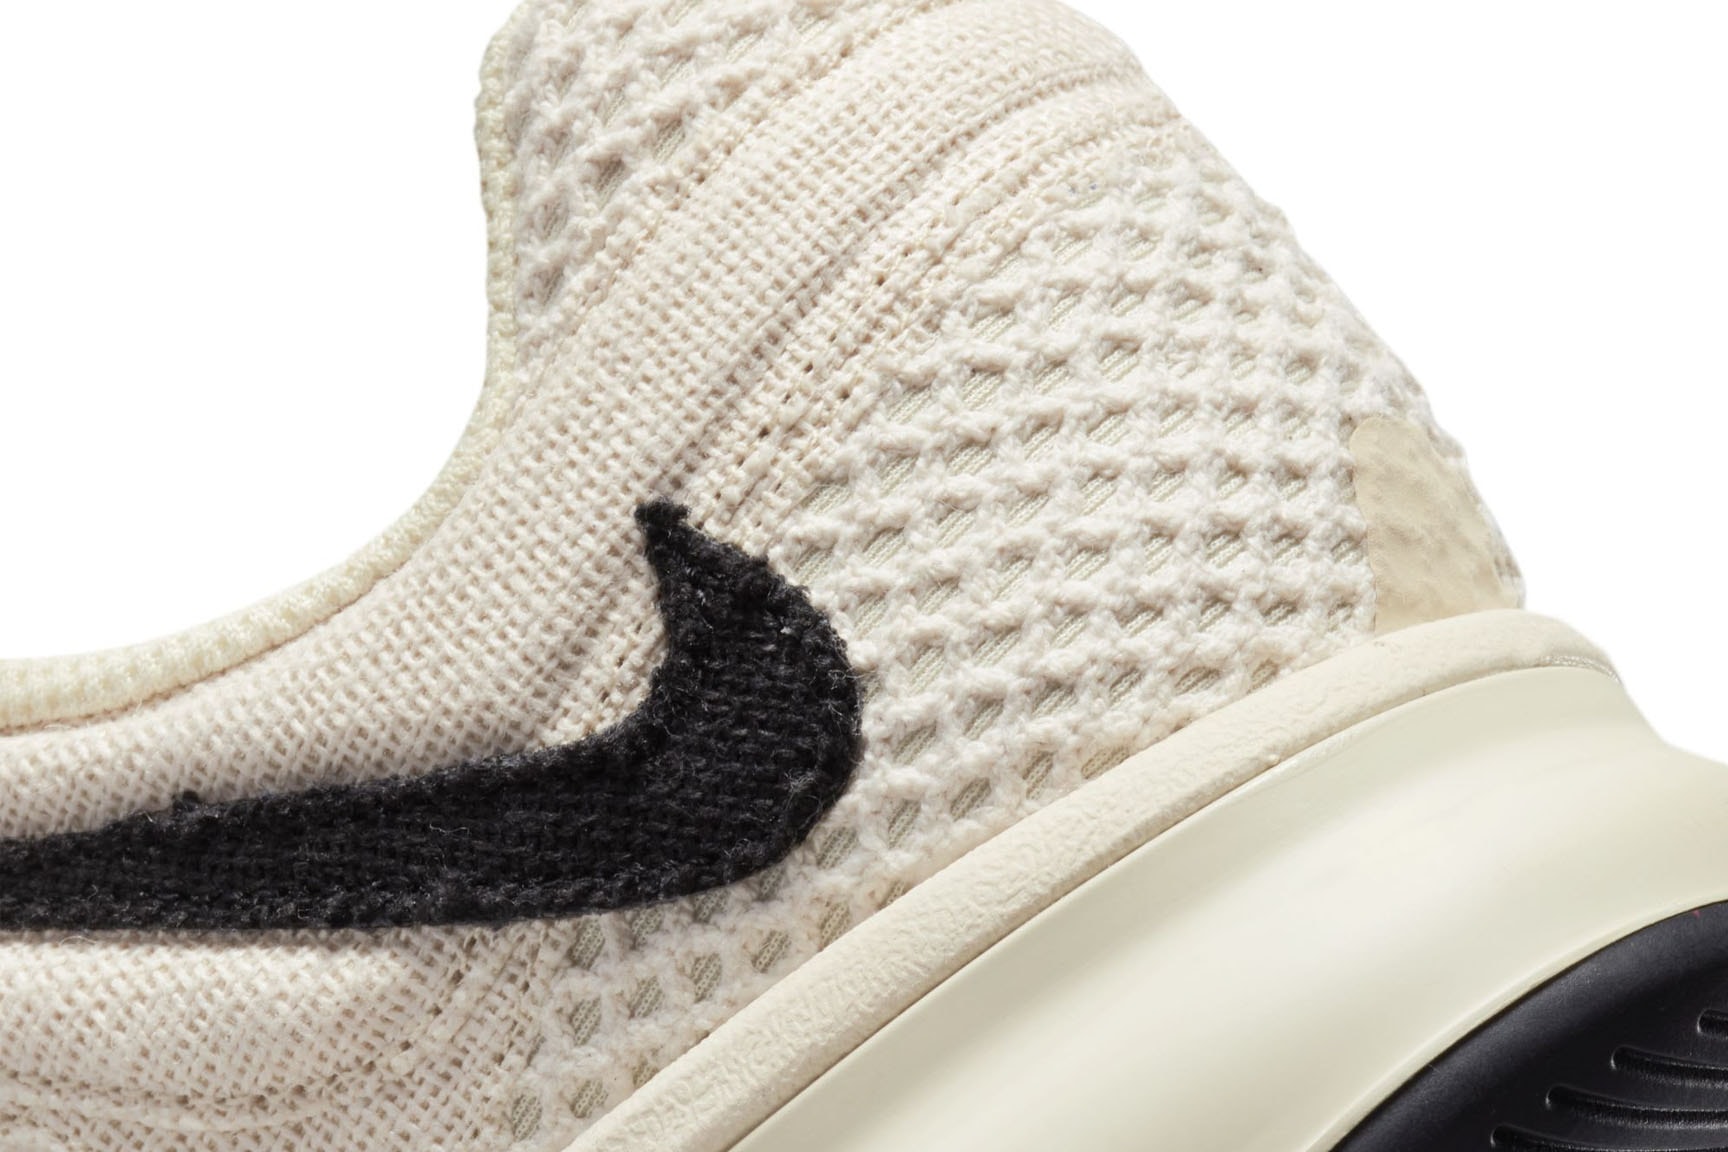 First Look Stussy Nike Air Max Fossil 2015 hemp mesh black white sail matte air unit release info date price